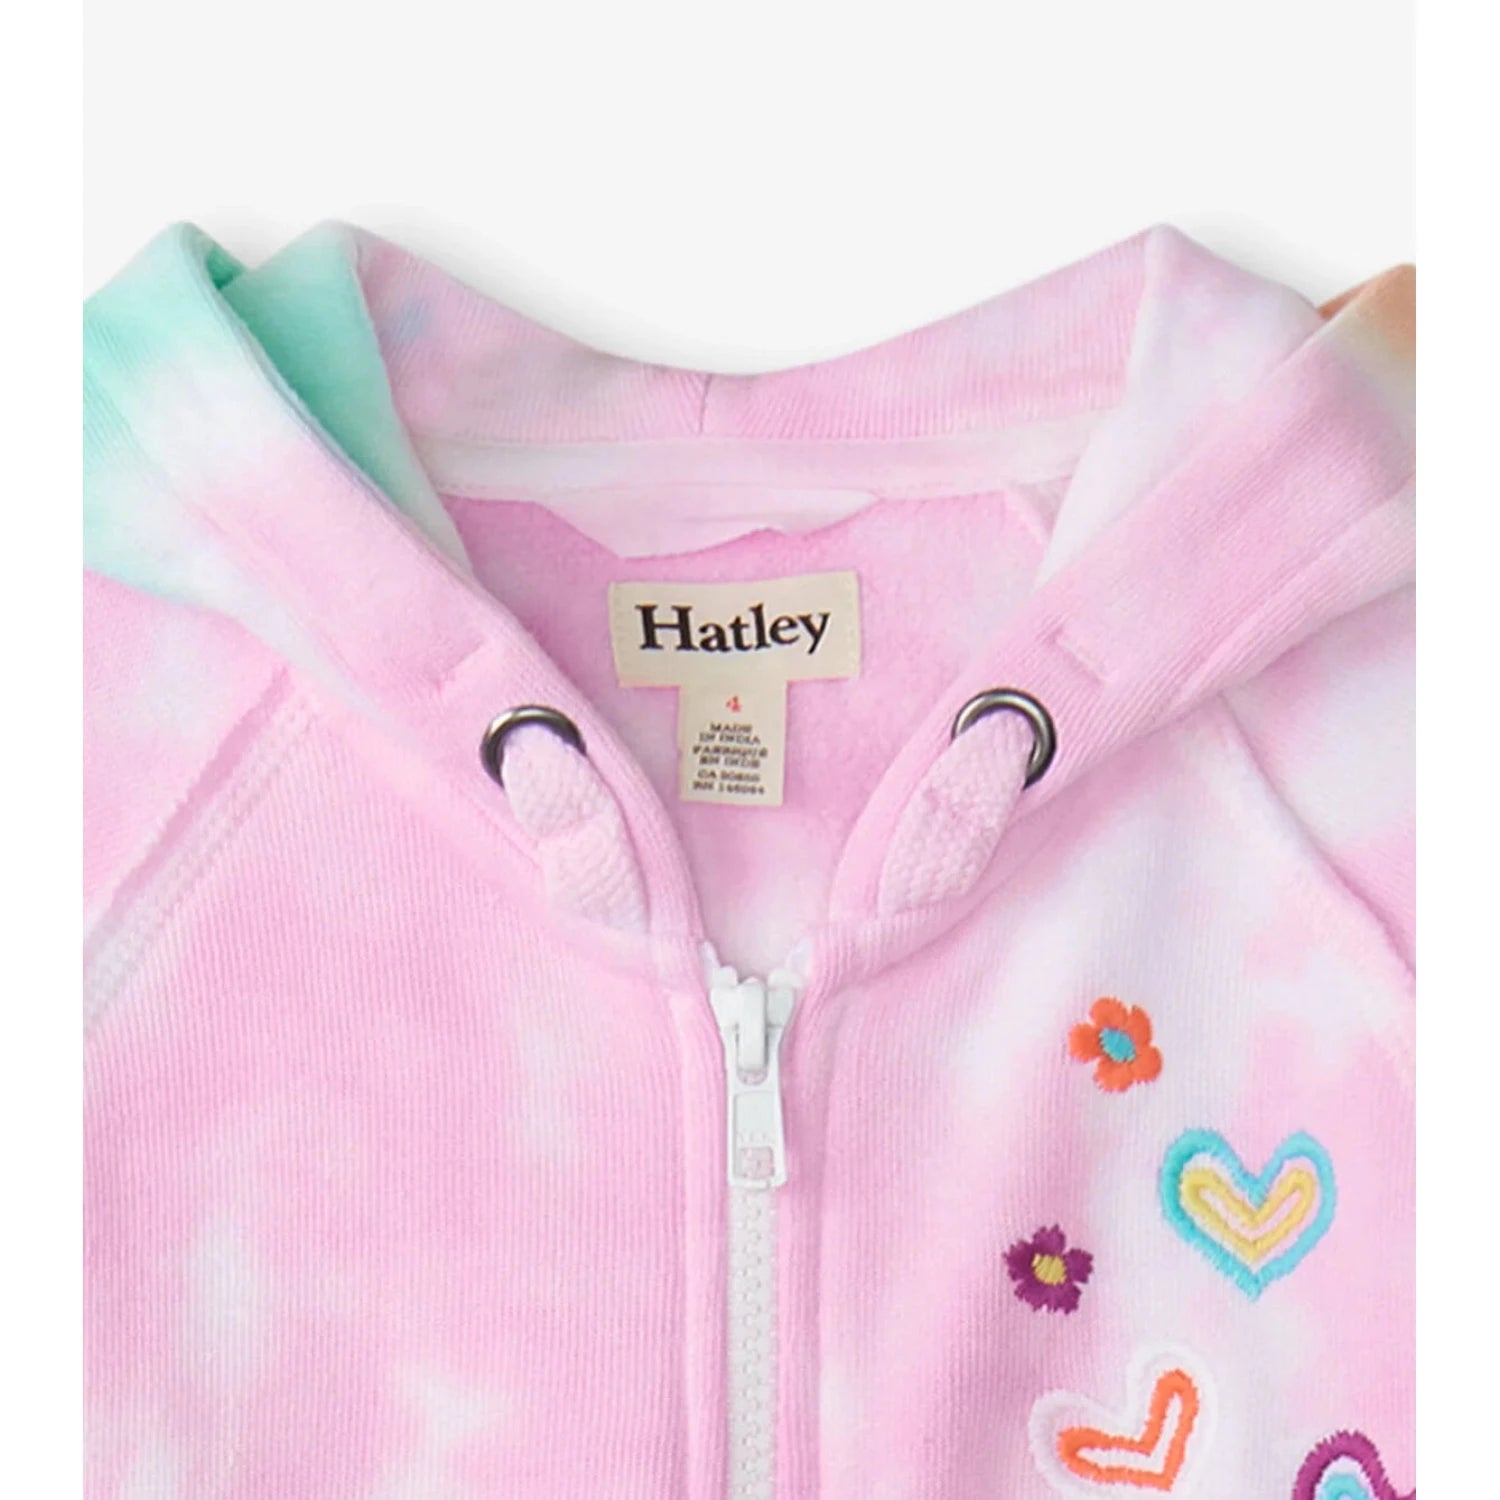 Hatley Girl's Summer Waves Tie Dye Hoodie. Front collar view.